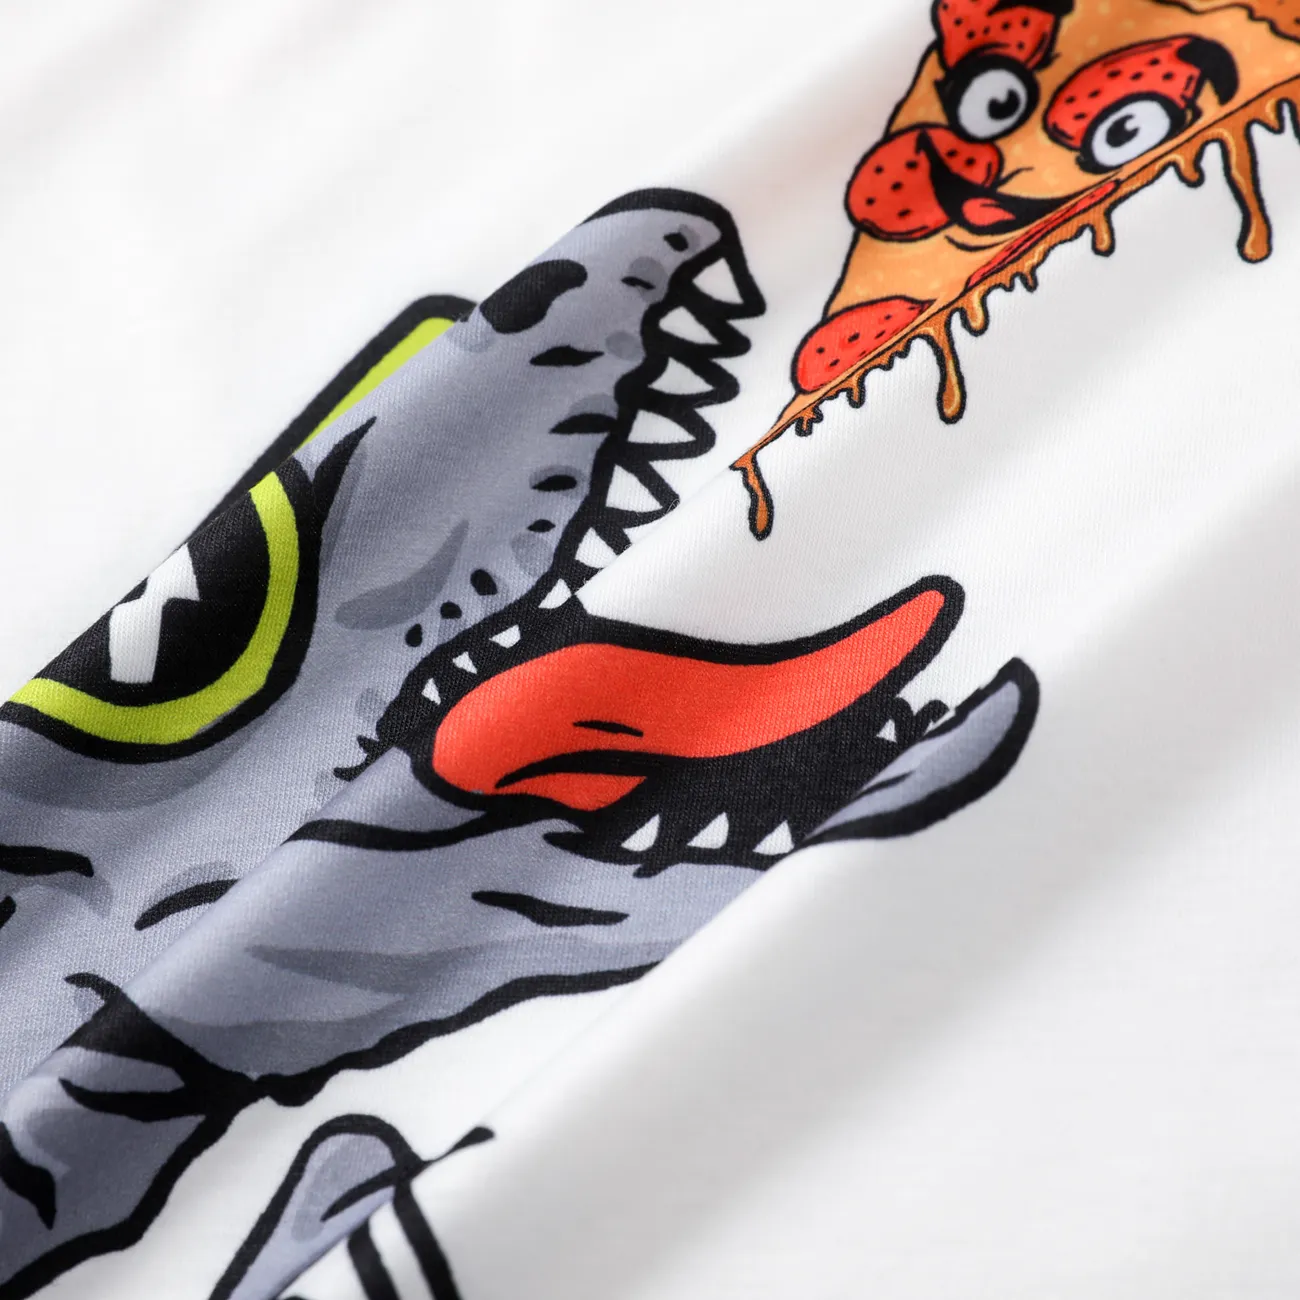 Kid Boy Animal Dinosaur Print Short-sleeve Tee White big image 1